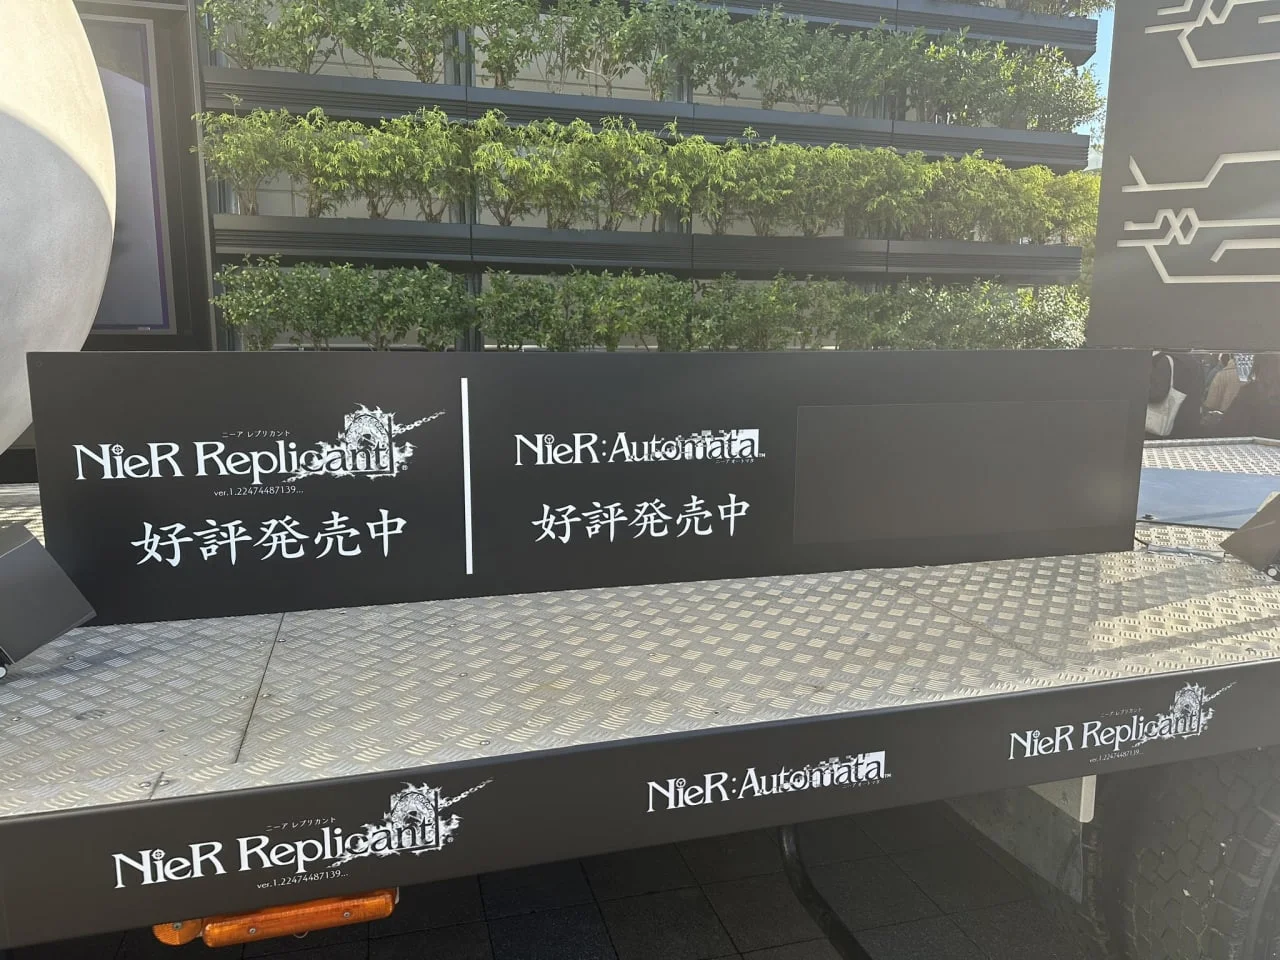 Продажи NieR:Automata превысили 7 млн копий - фото 1